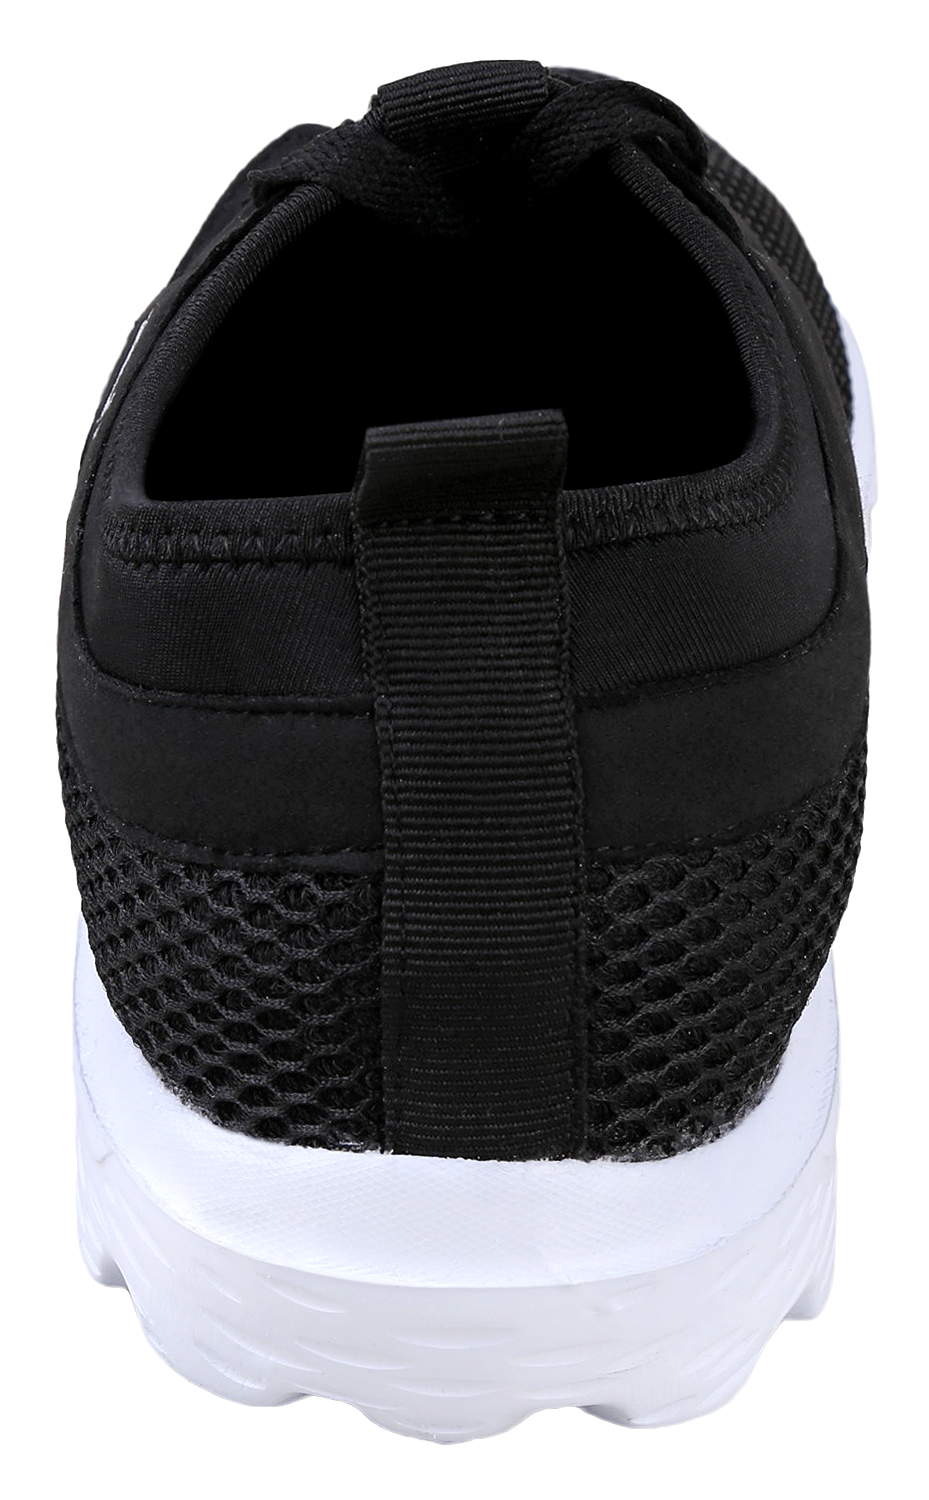 Urban Fox Men's Breeze Lightweight Shoes | Lightweight Shoes for Men | Casual Shoes | Walking Shoes for Men | Black/White 13 M US - image 5 of 7